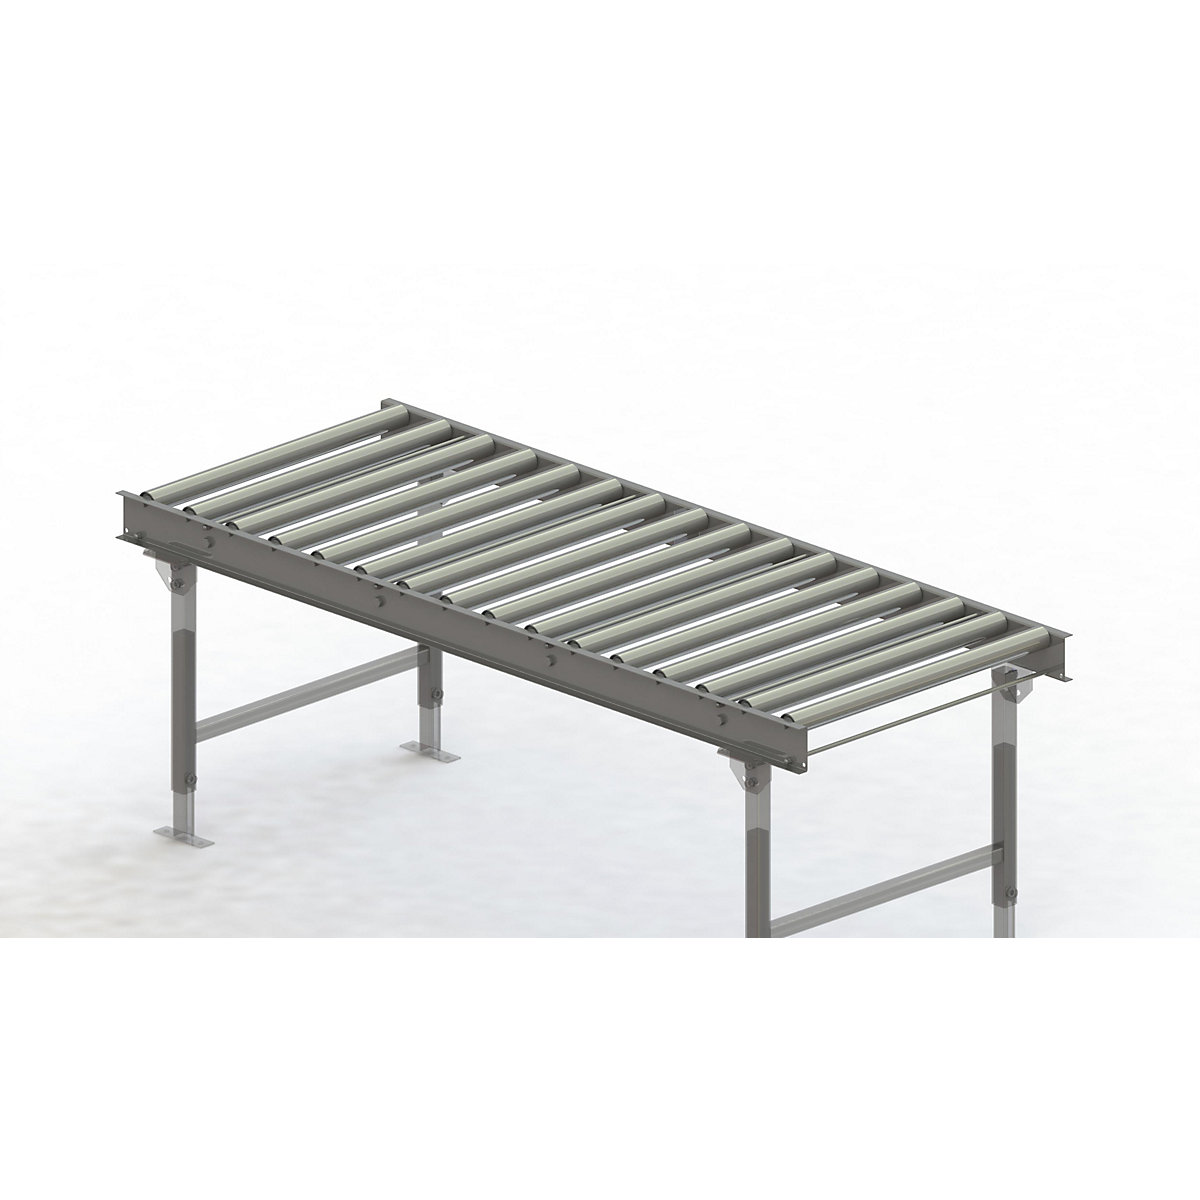 Gura – Roller conveyor, steel frame with zinc plated steel rollers, track width 750 mm, distance between axles 125 mm, length 2 m